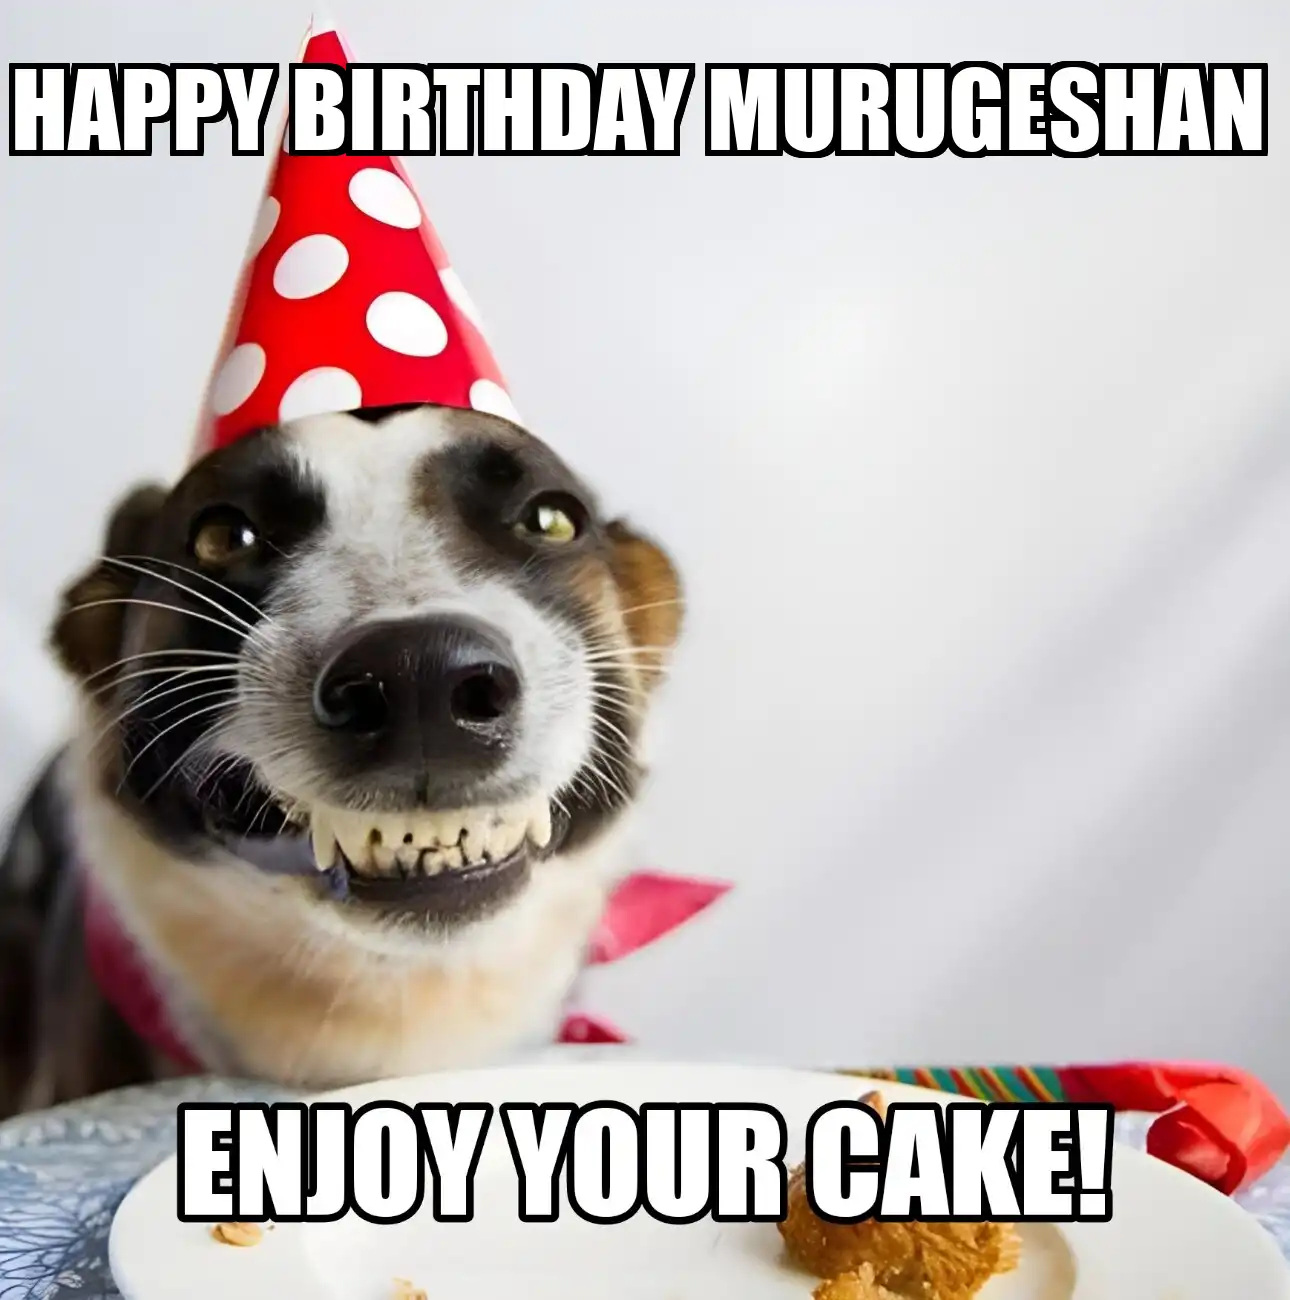 Happy Birthday Murugeshan Enjoy Your Cake Dog Meme